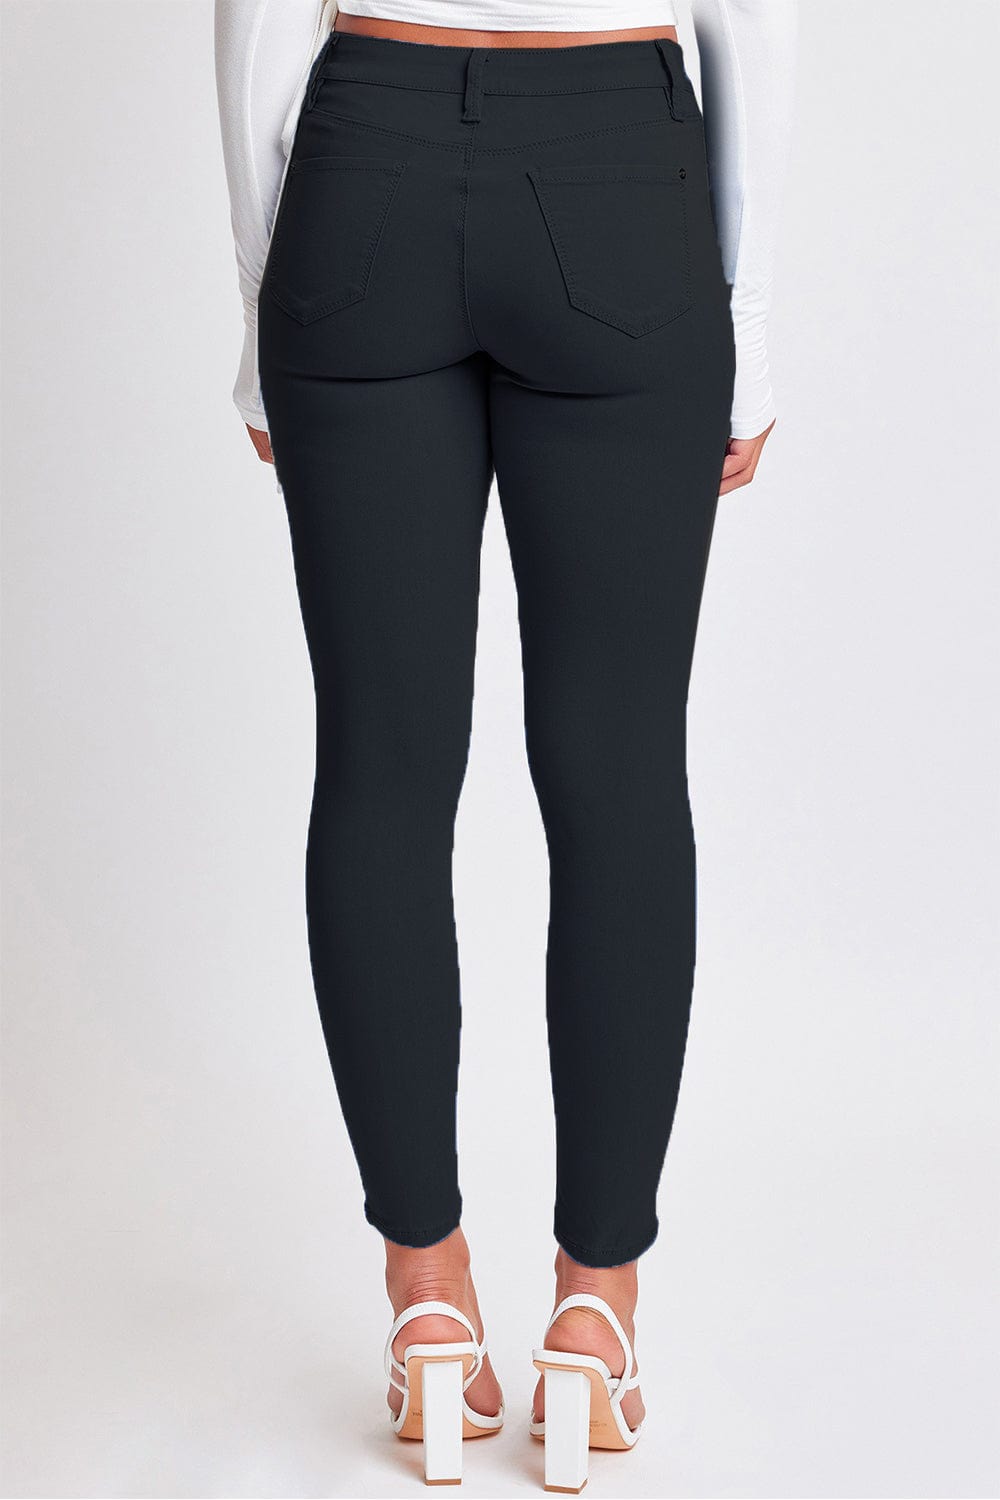 The802Gypsy pants ❤GYPSY-YMI-Hyperstretch Mid-Rise Skinny Pants